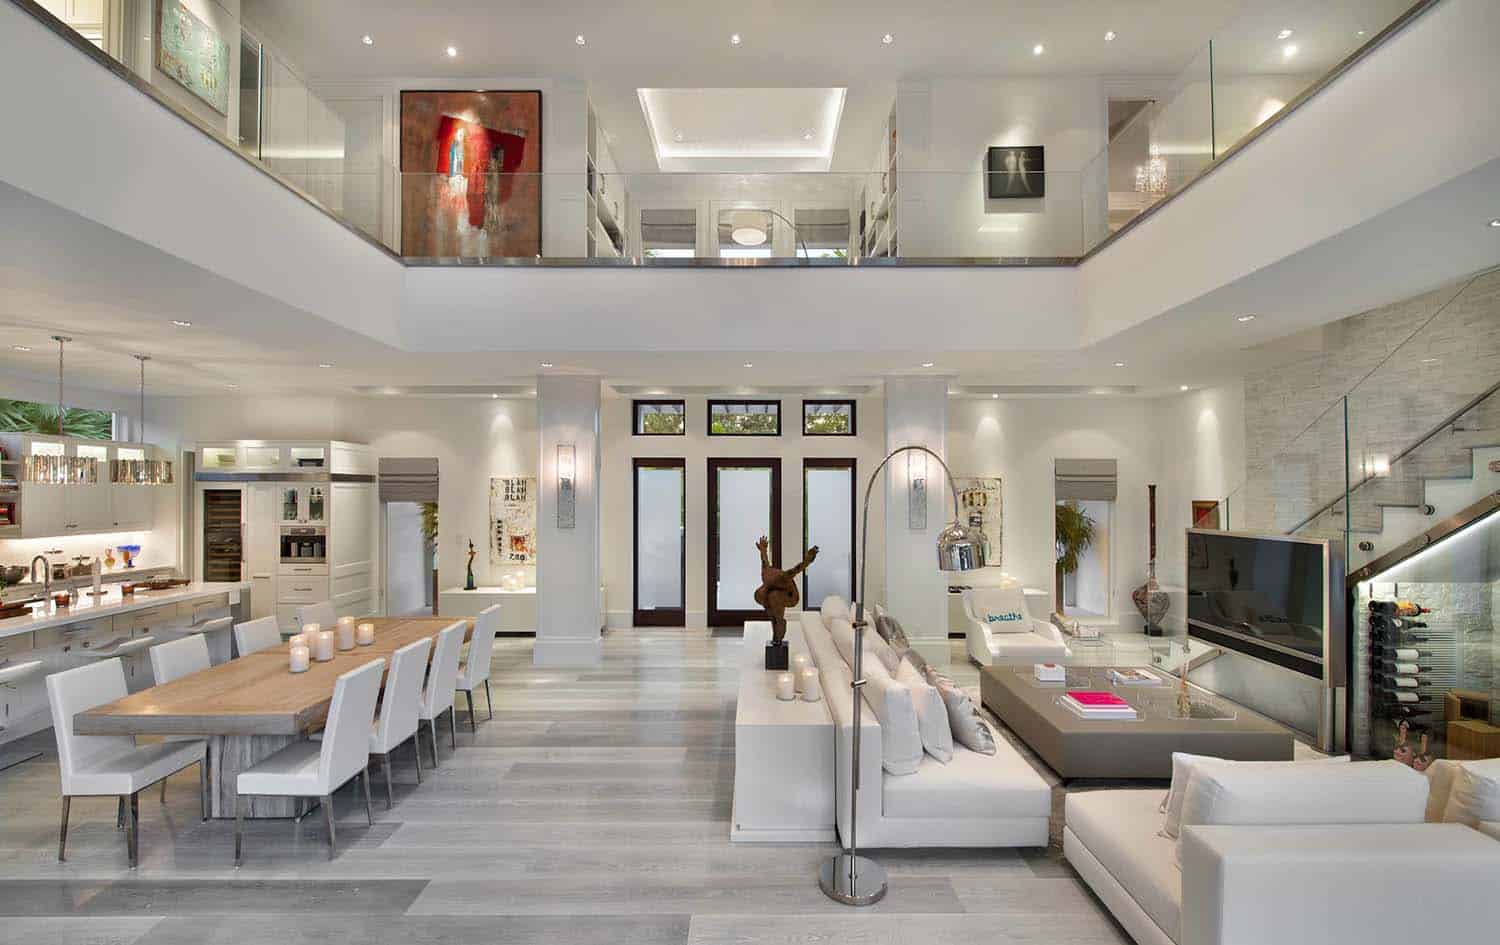 Exquisite modern coastal home in Florida with luminous interiors